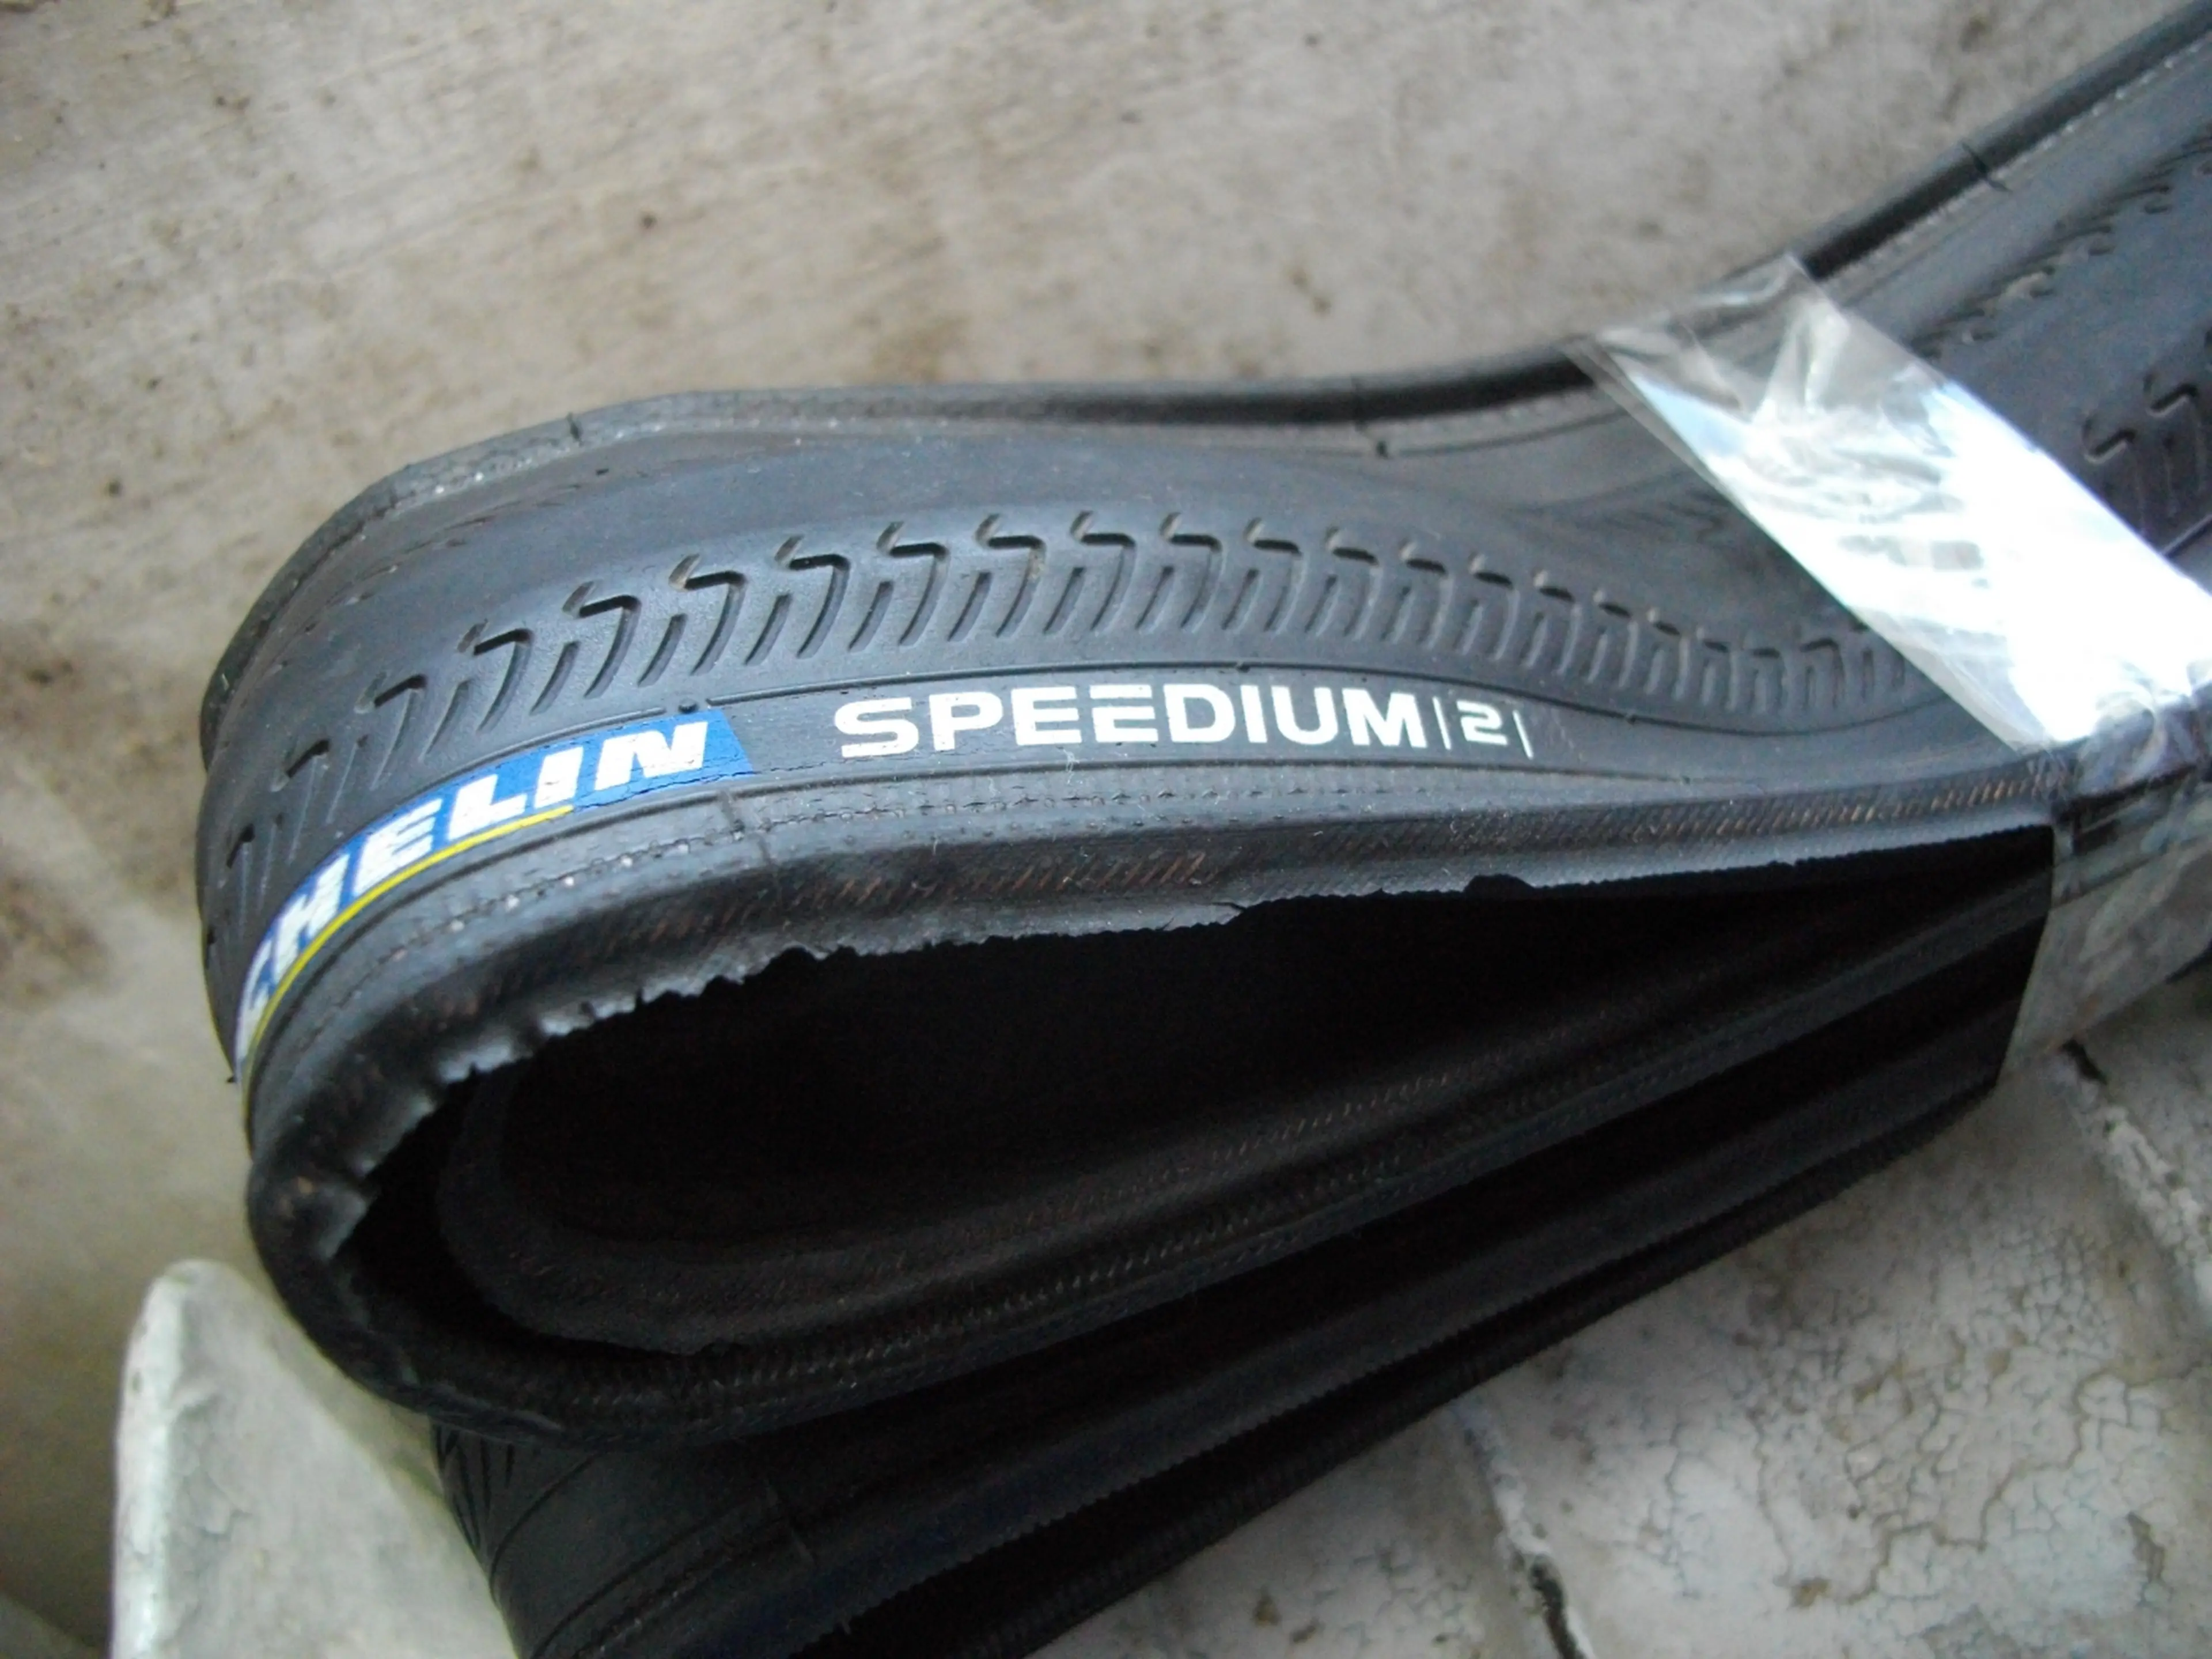 Image De cursiera Michelin speedium 2